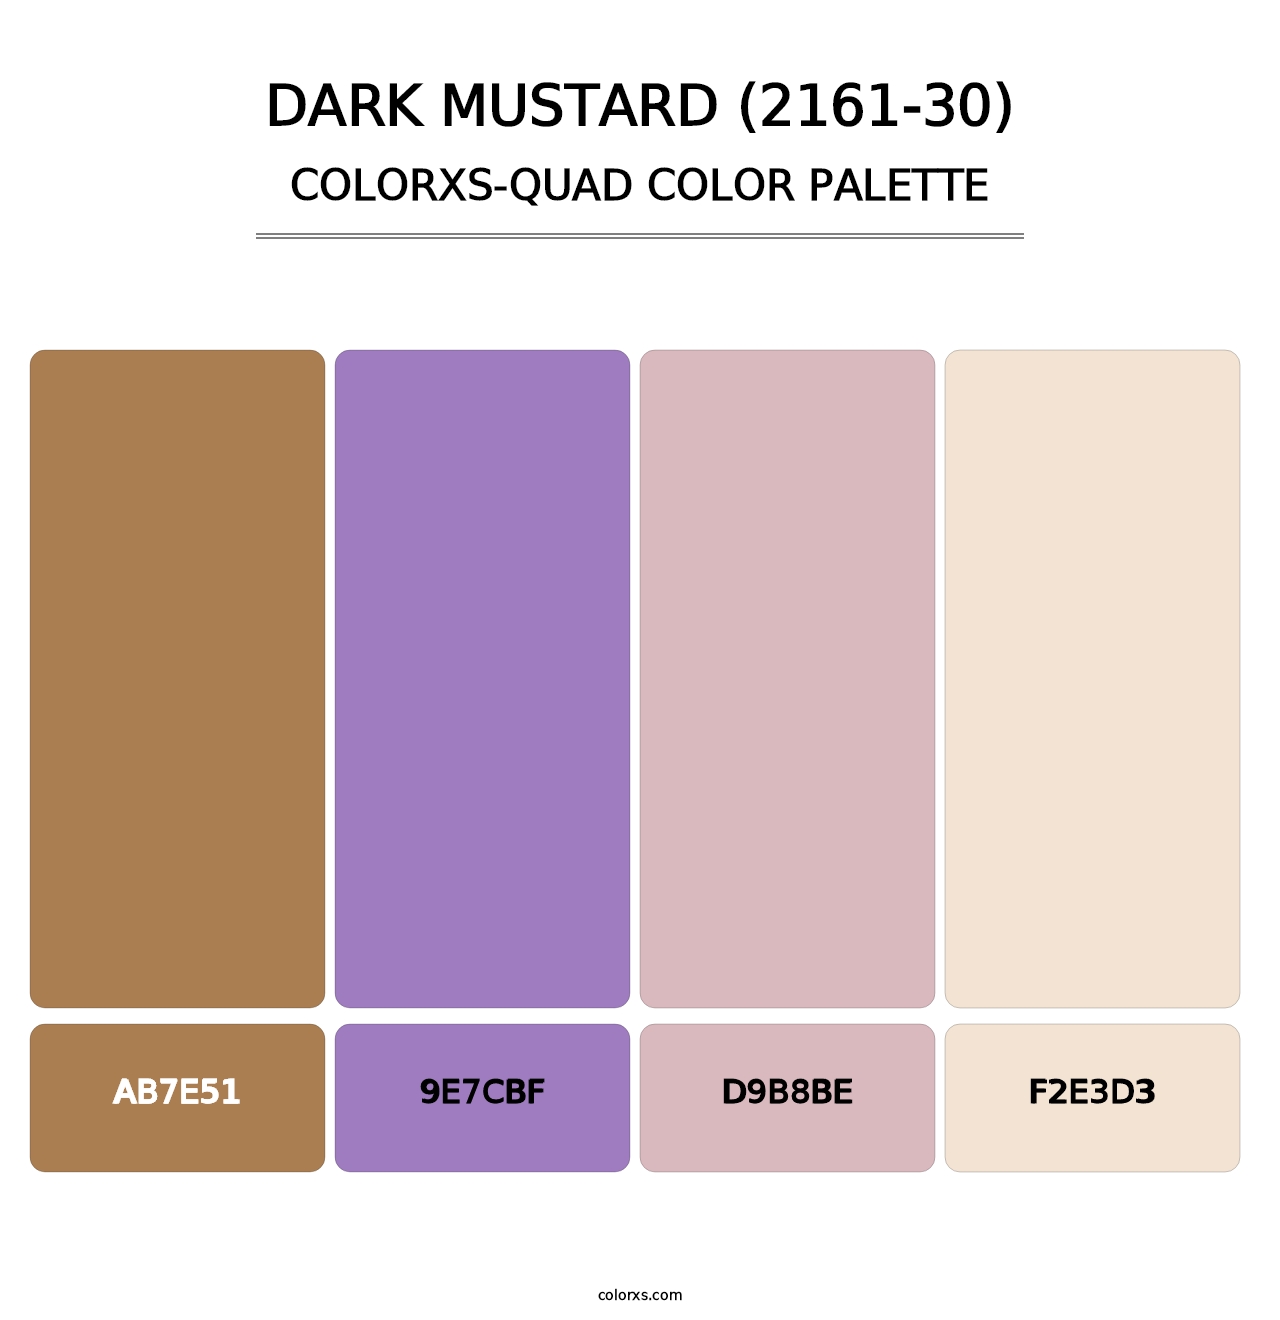 Dark Mustard (2161-30) - Colorxs Quad Palette